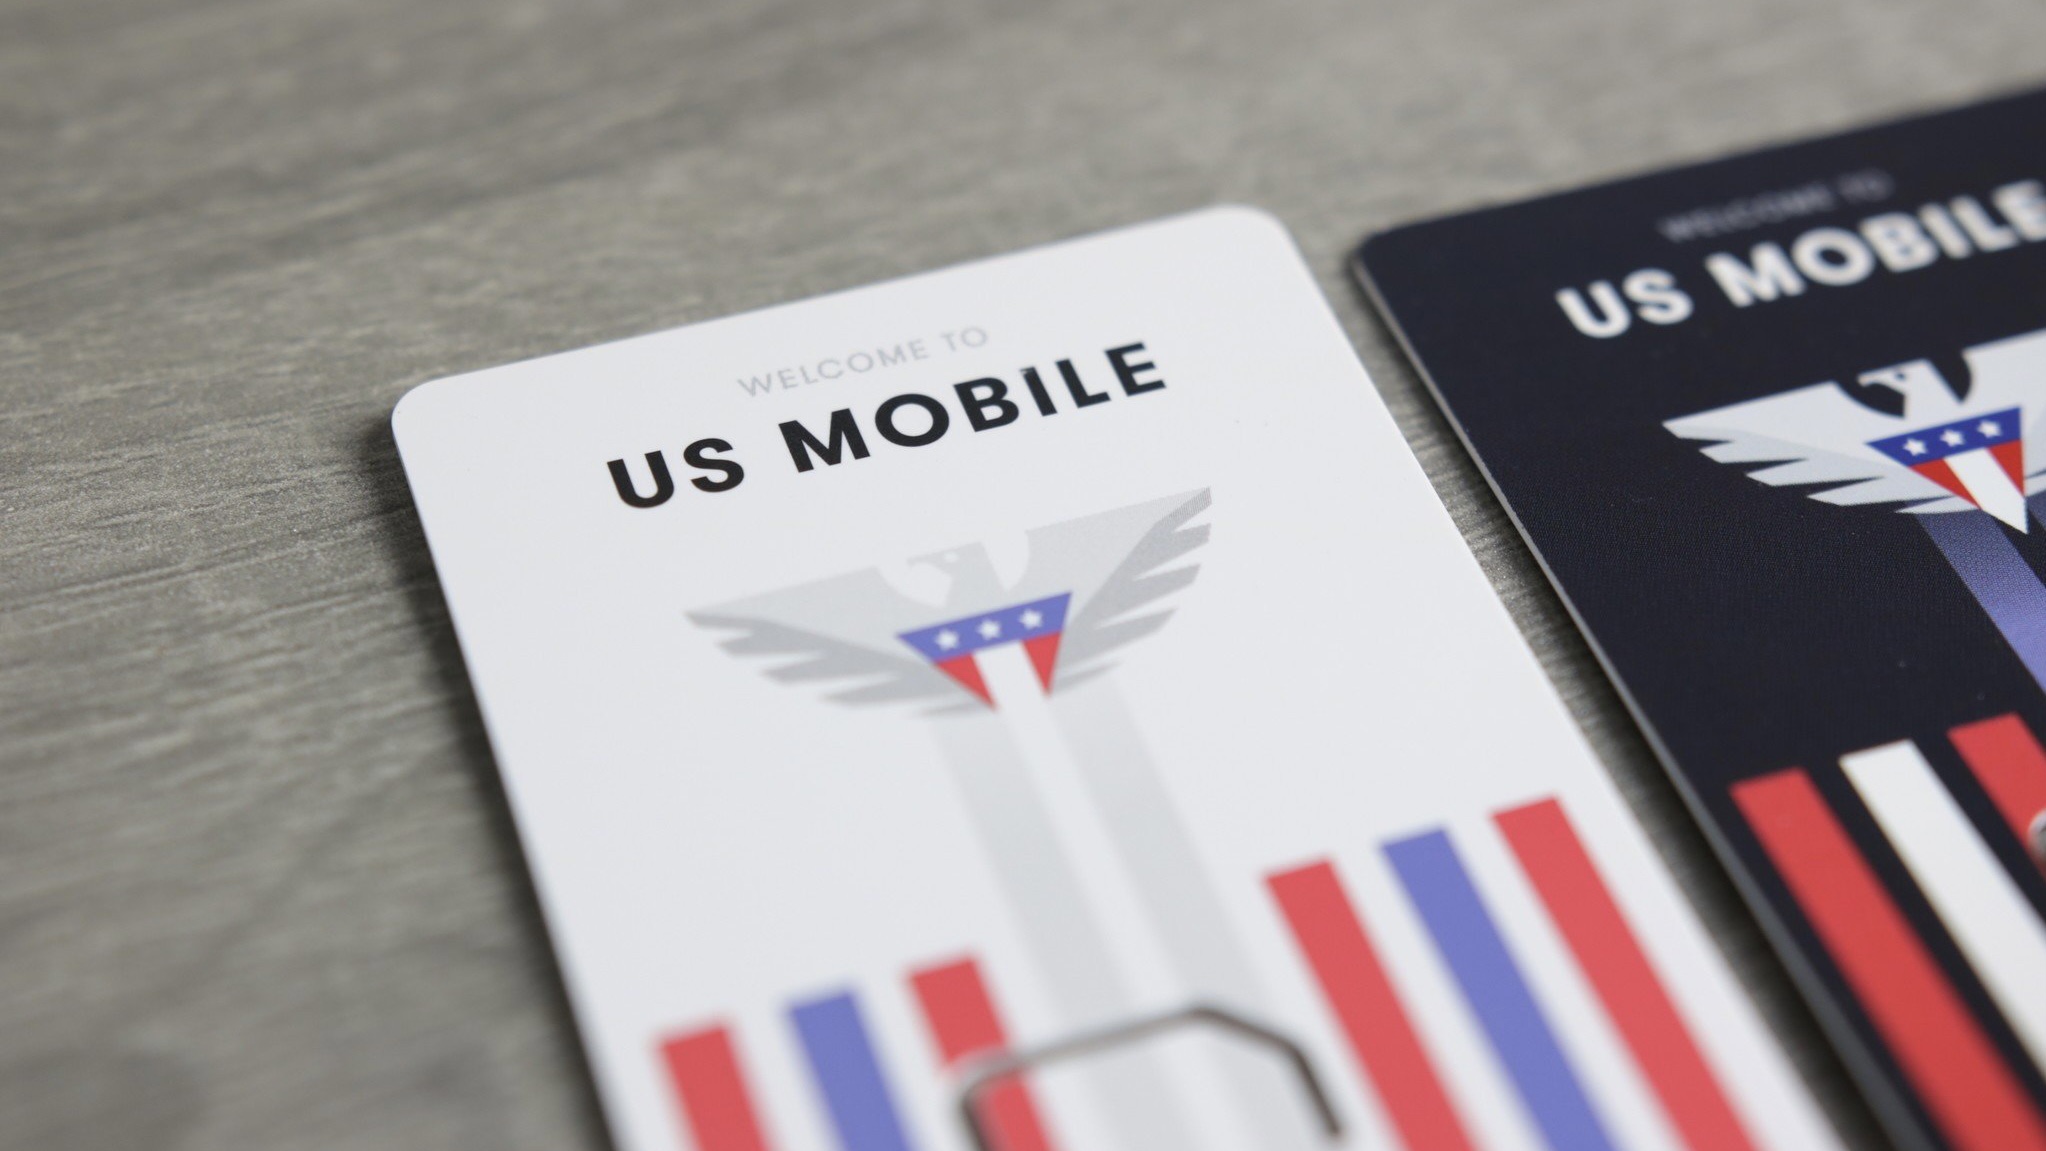 US Mobile SIM cards